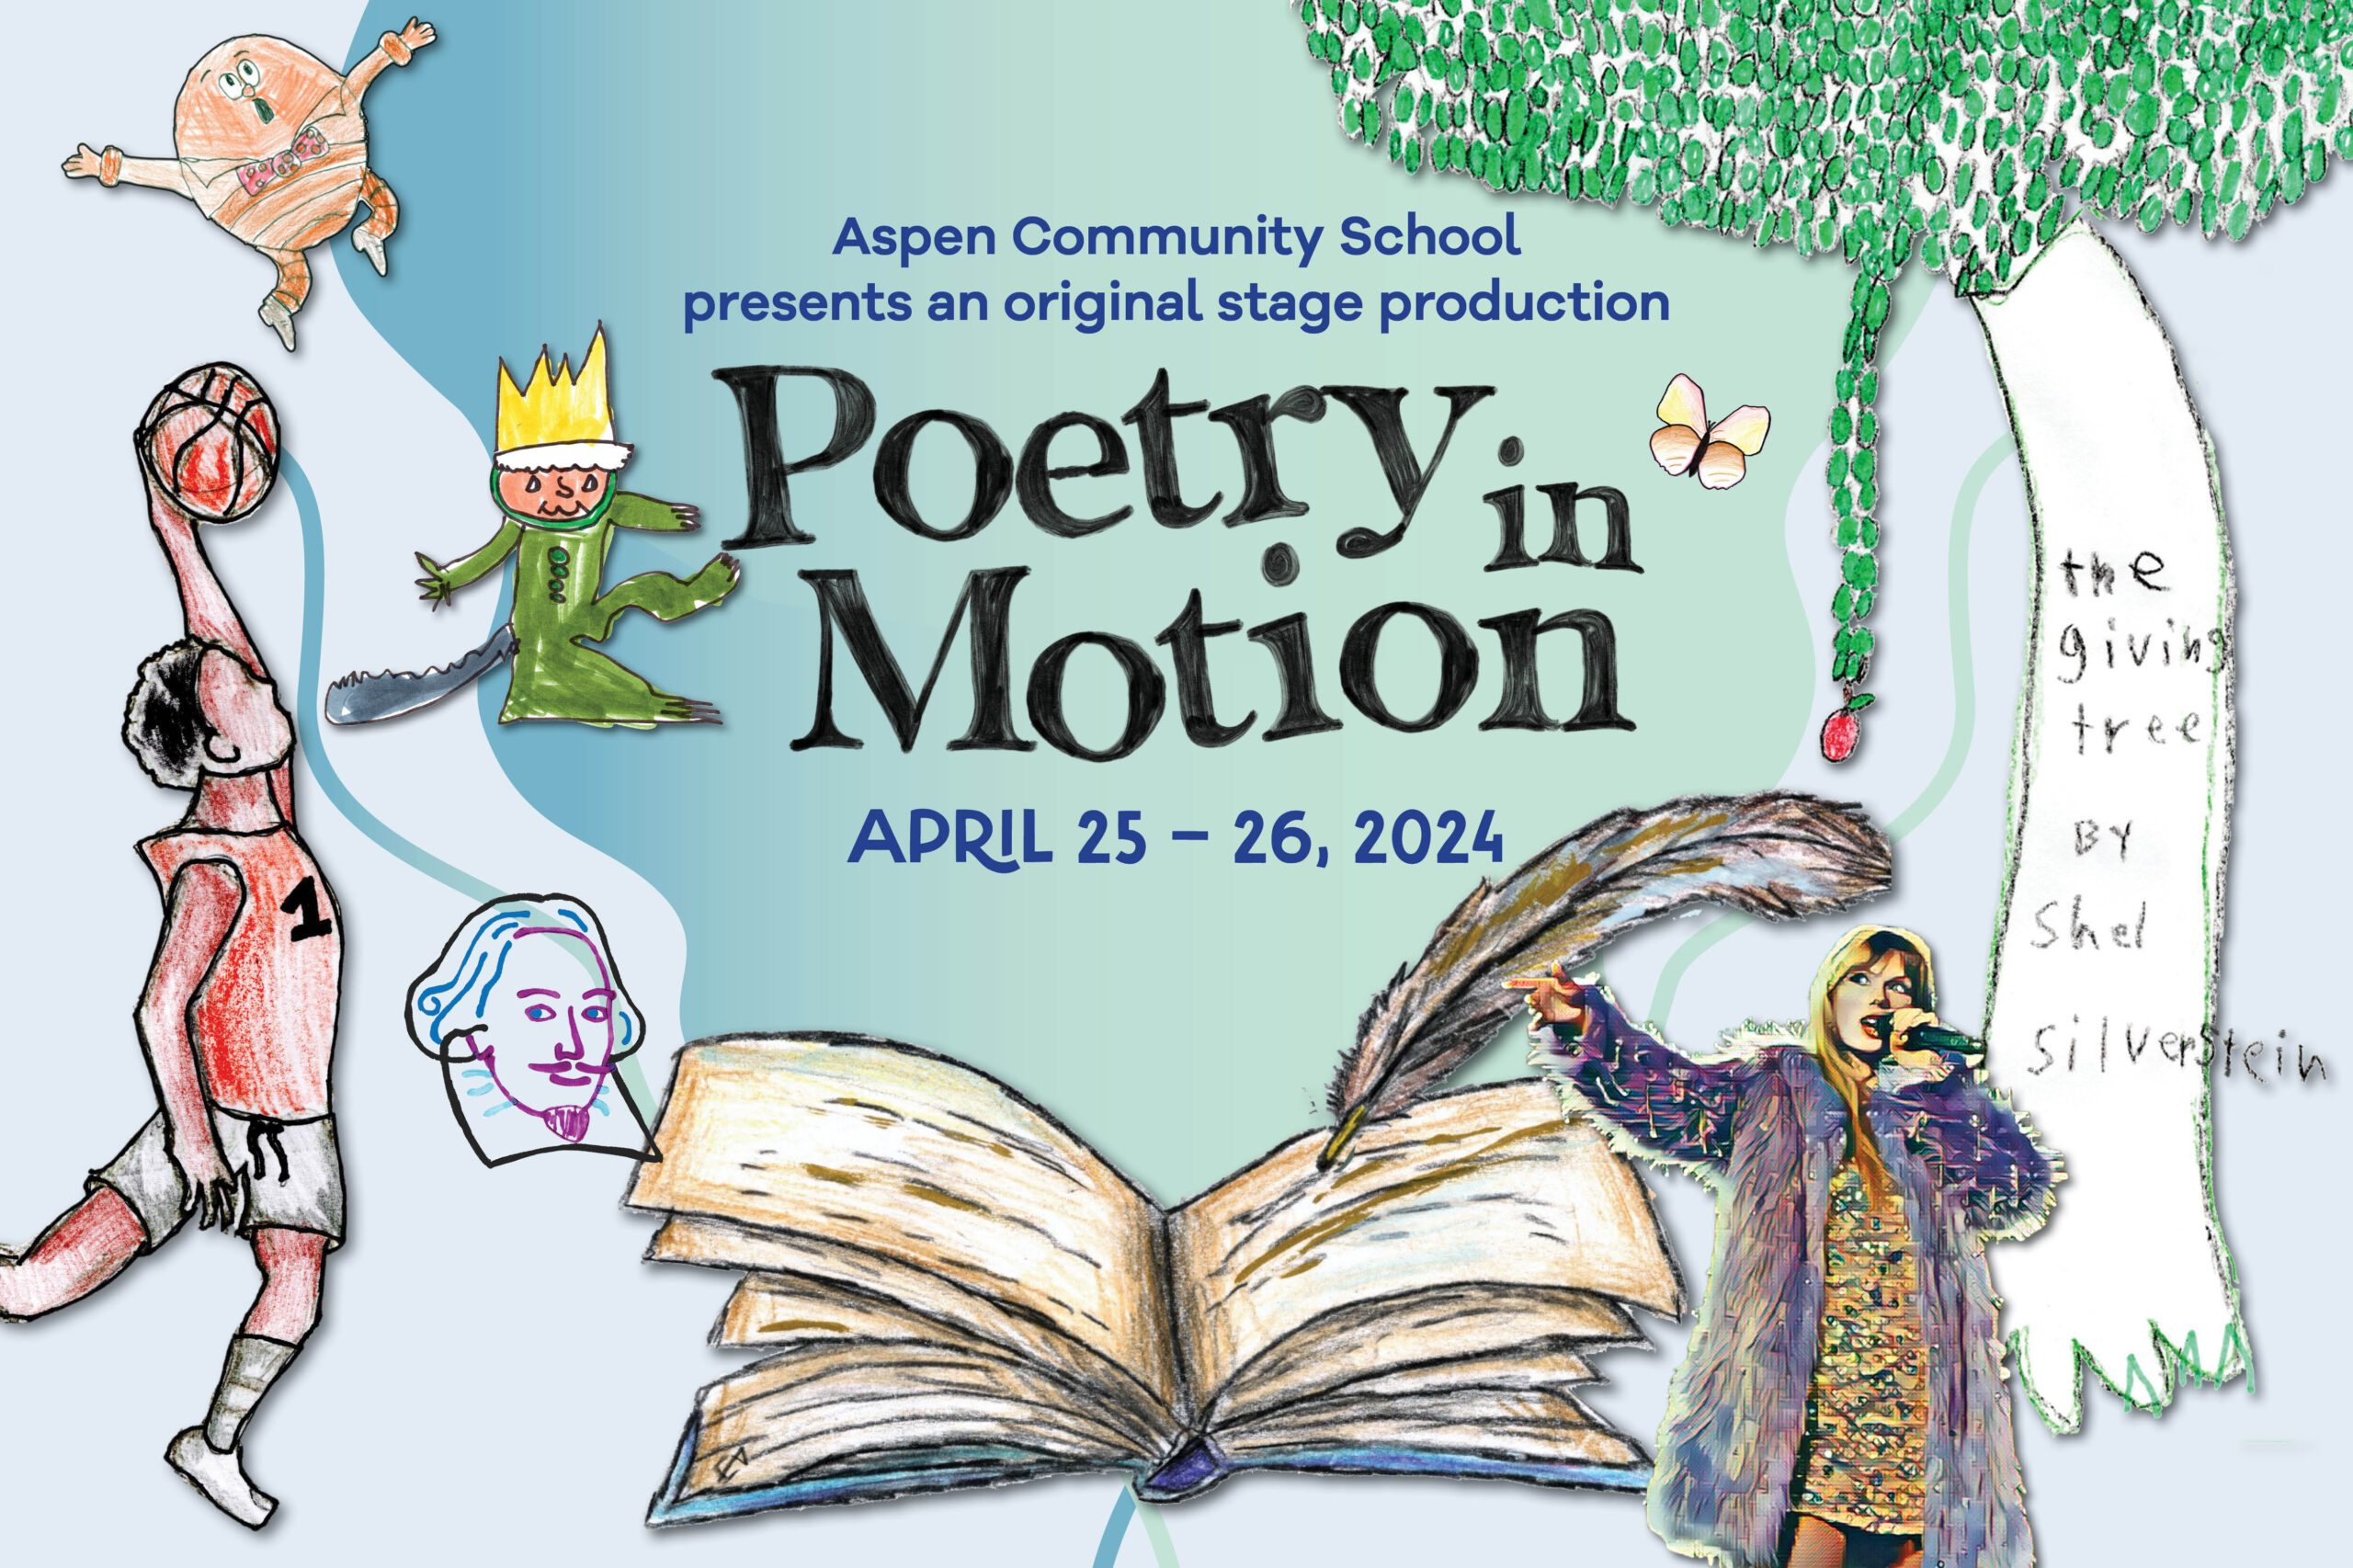 Aspen Community School presents Poetry in Motion